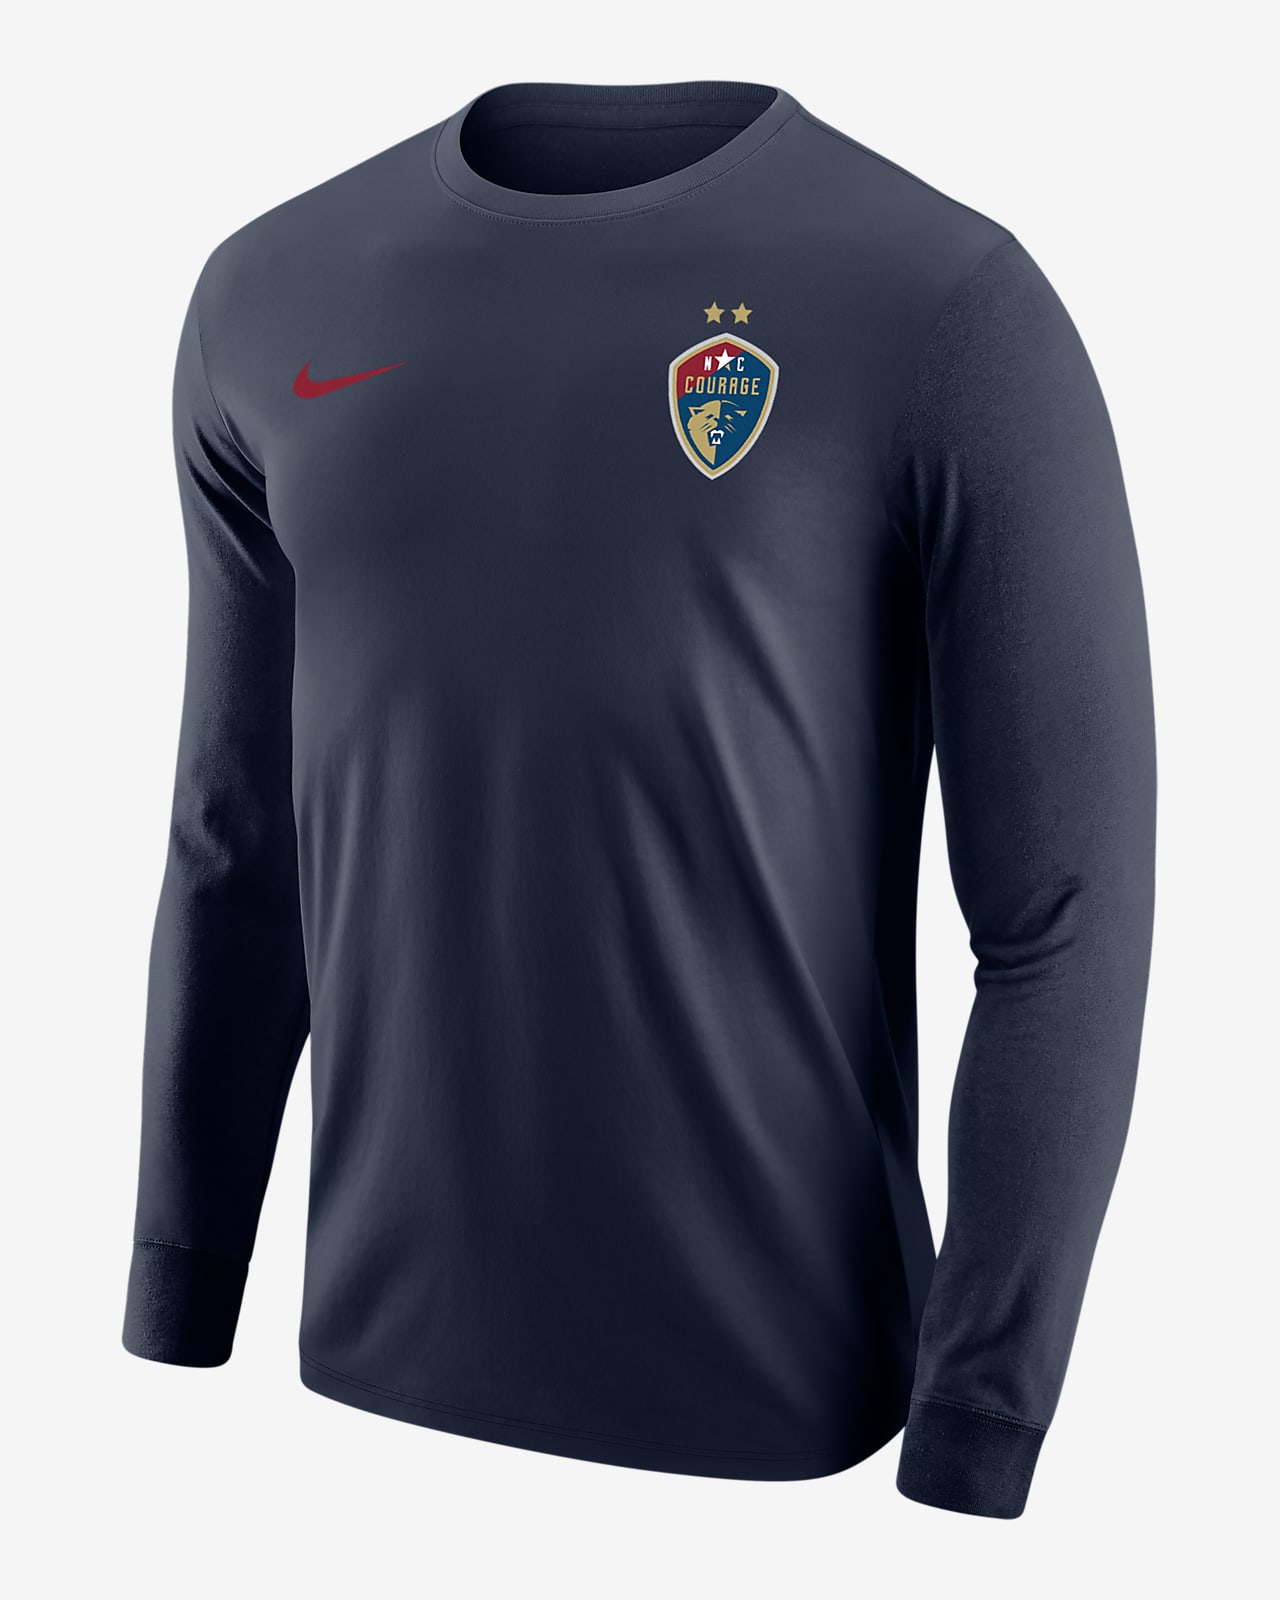 North Carolina Courage Men's Nike Soccer Long-Sleeve T-Shirt